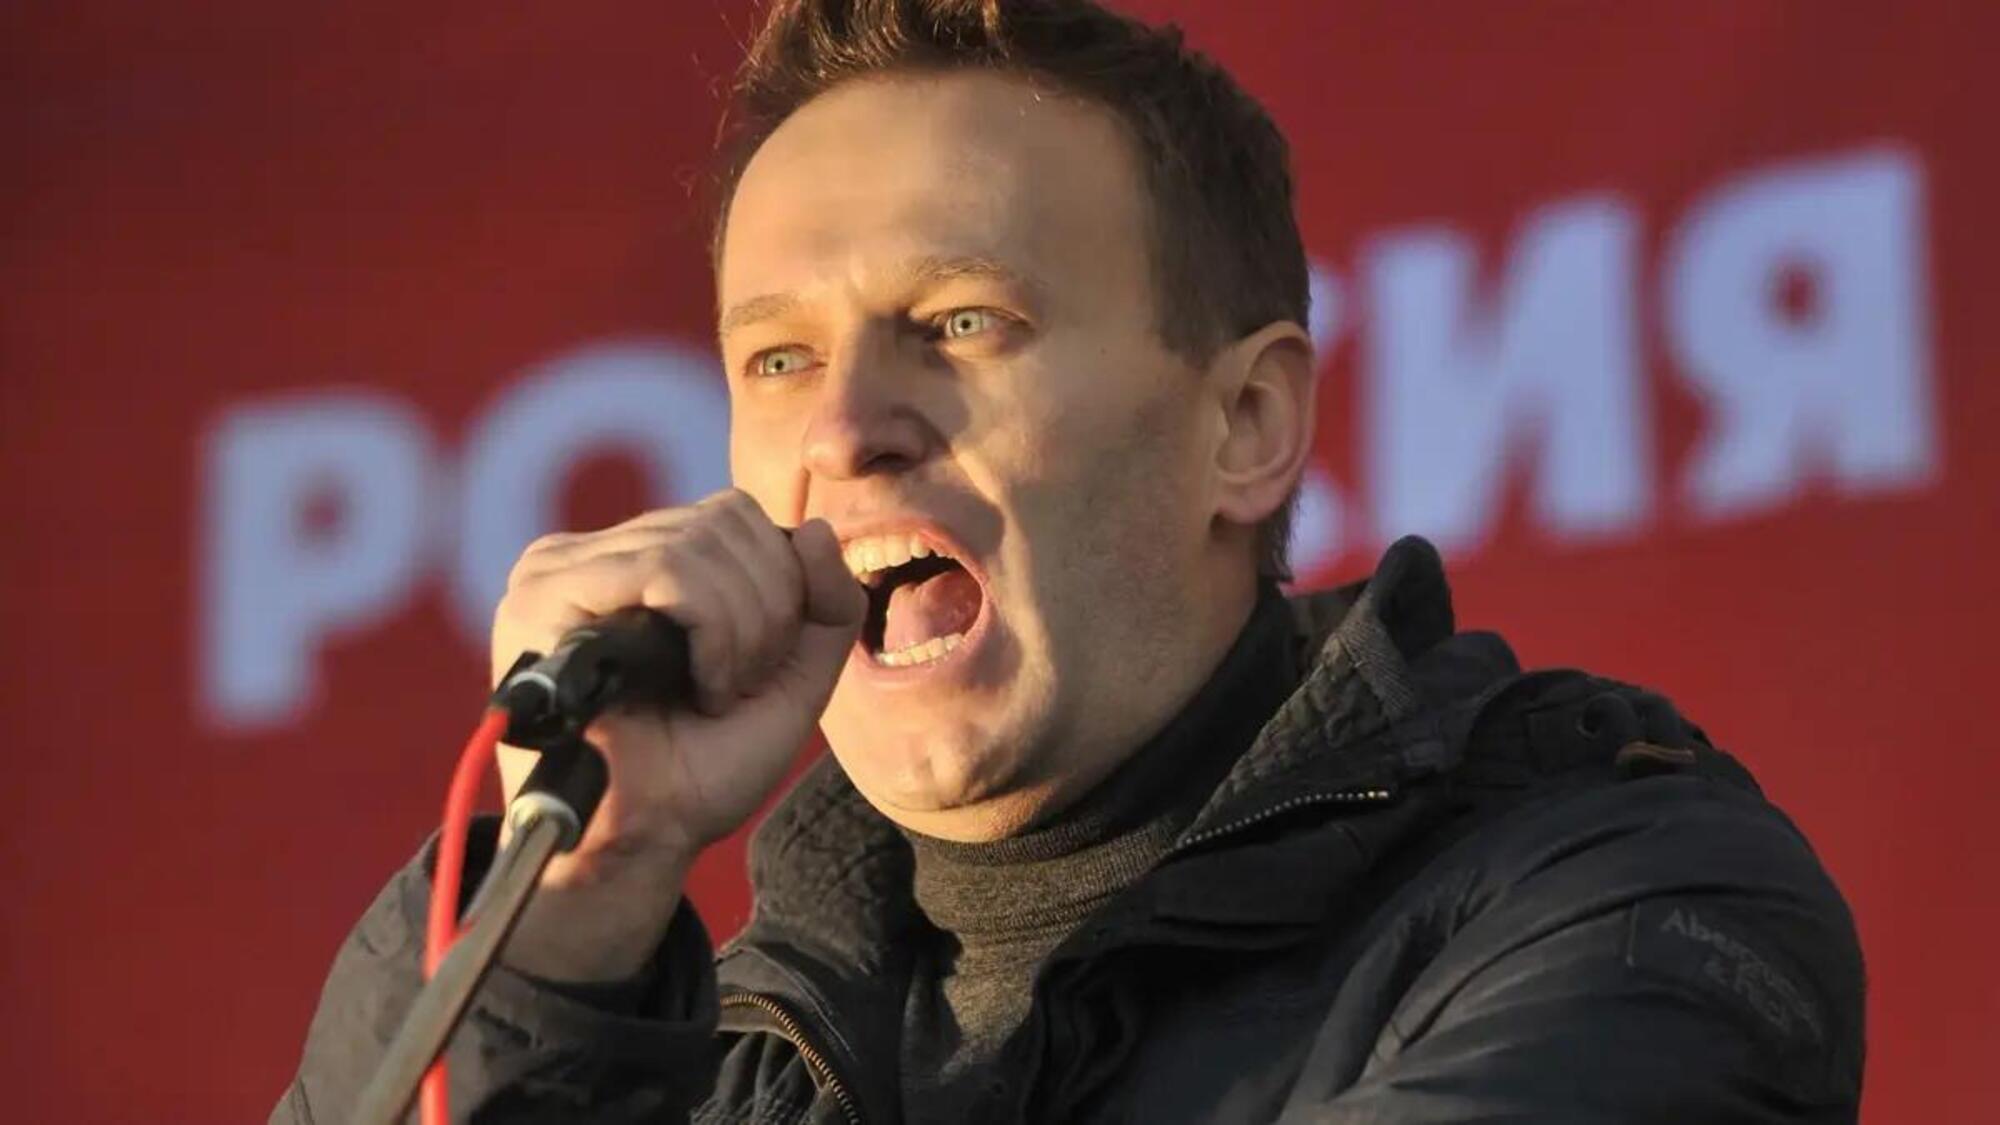 20221017 121501474 5172Il dissidente russo Navalny